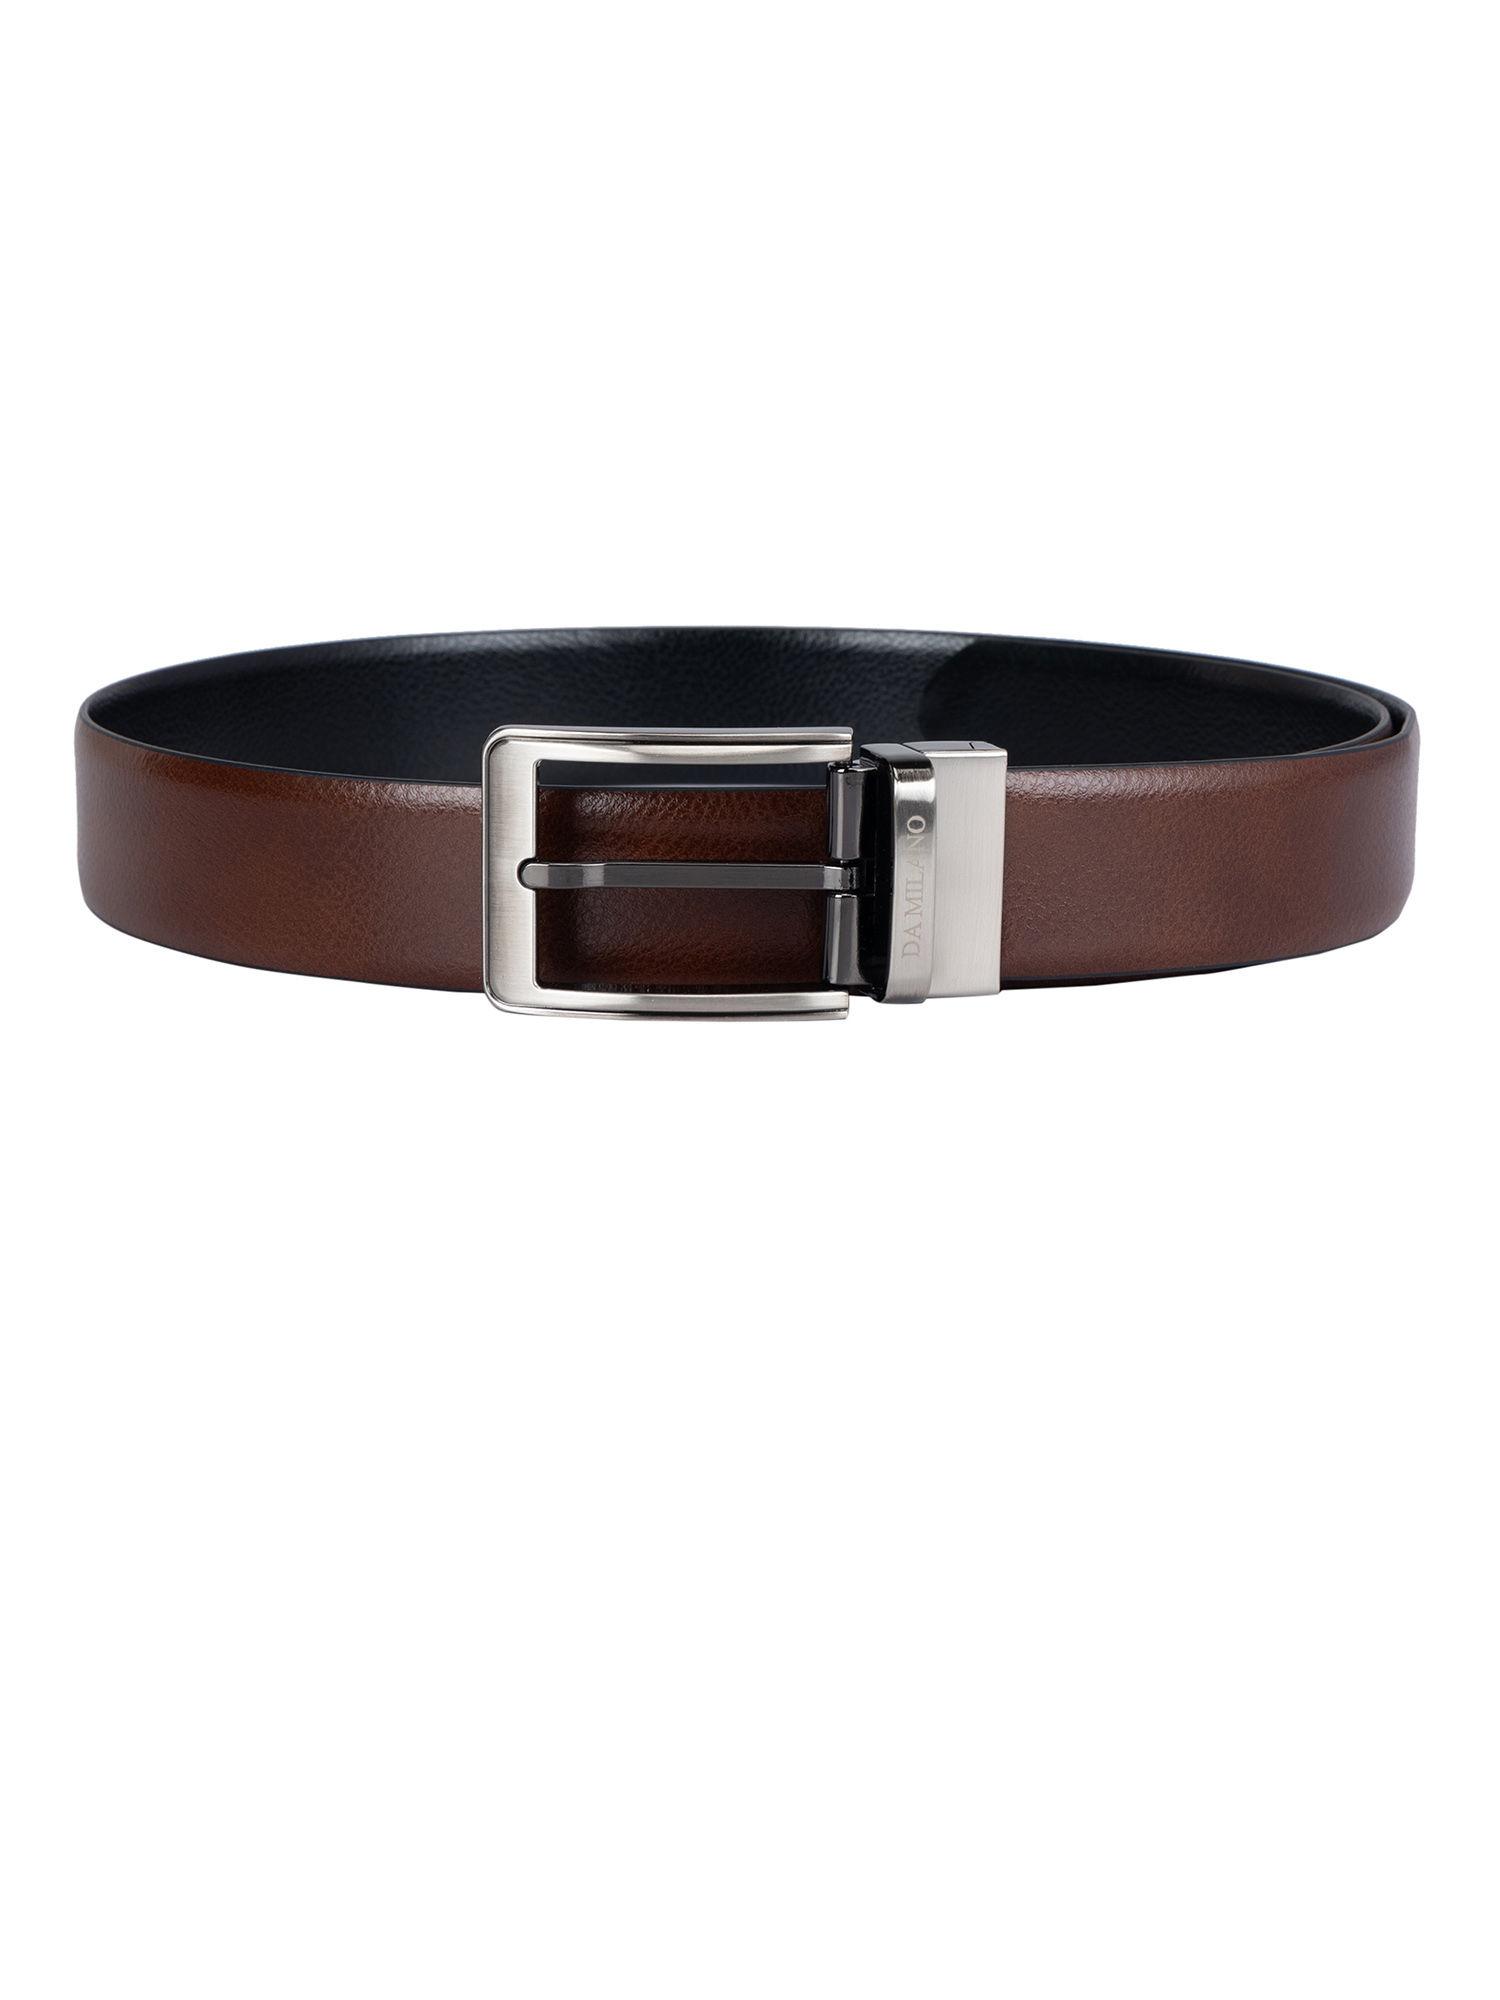 genuine leather brown & black mens belt